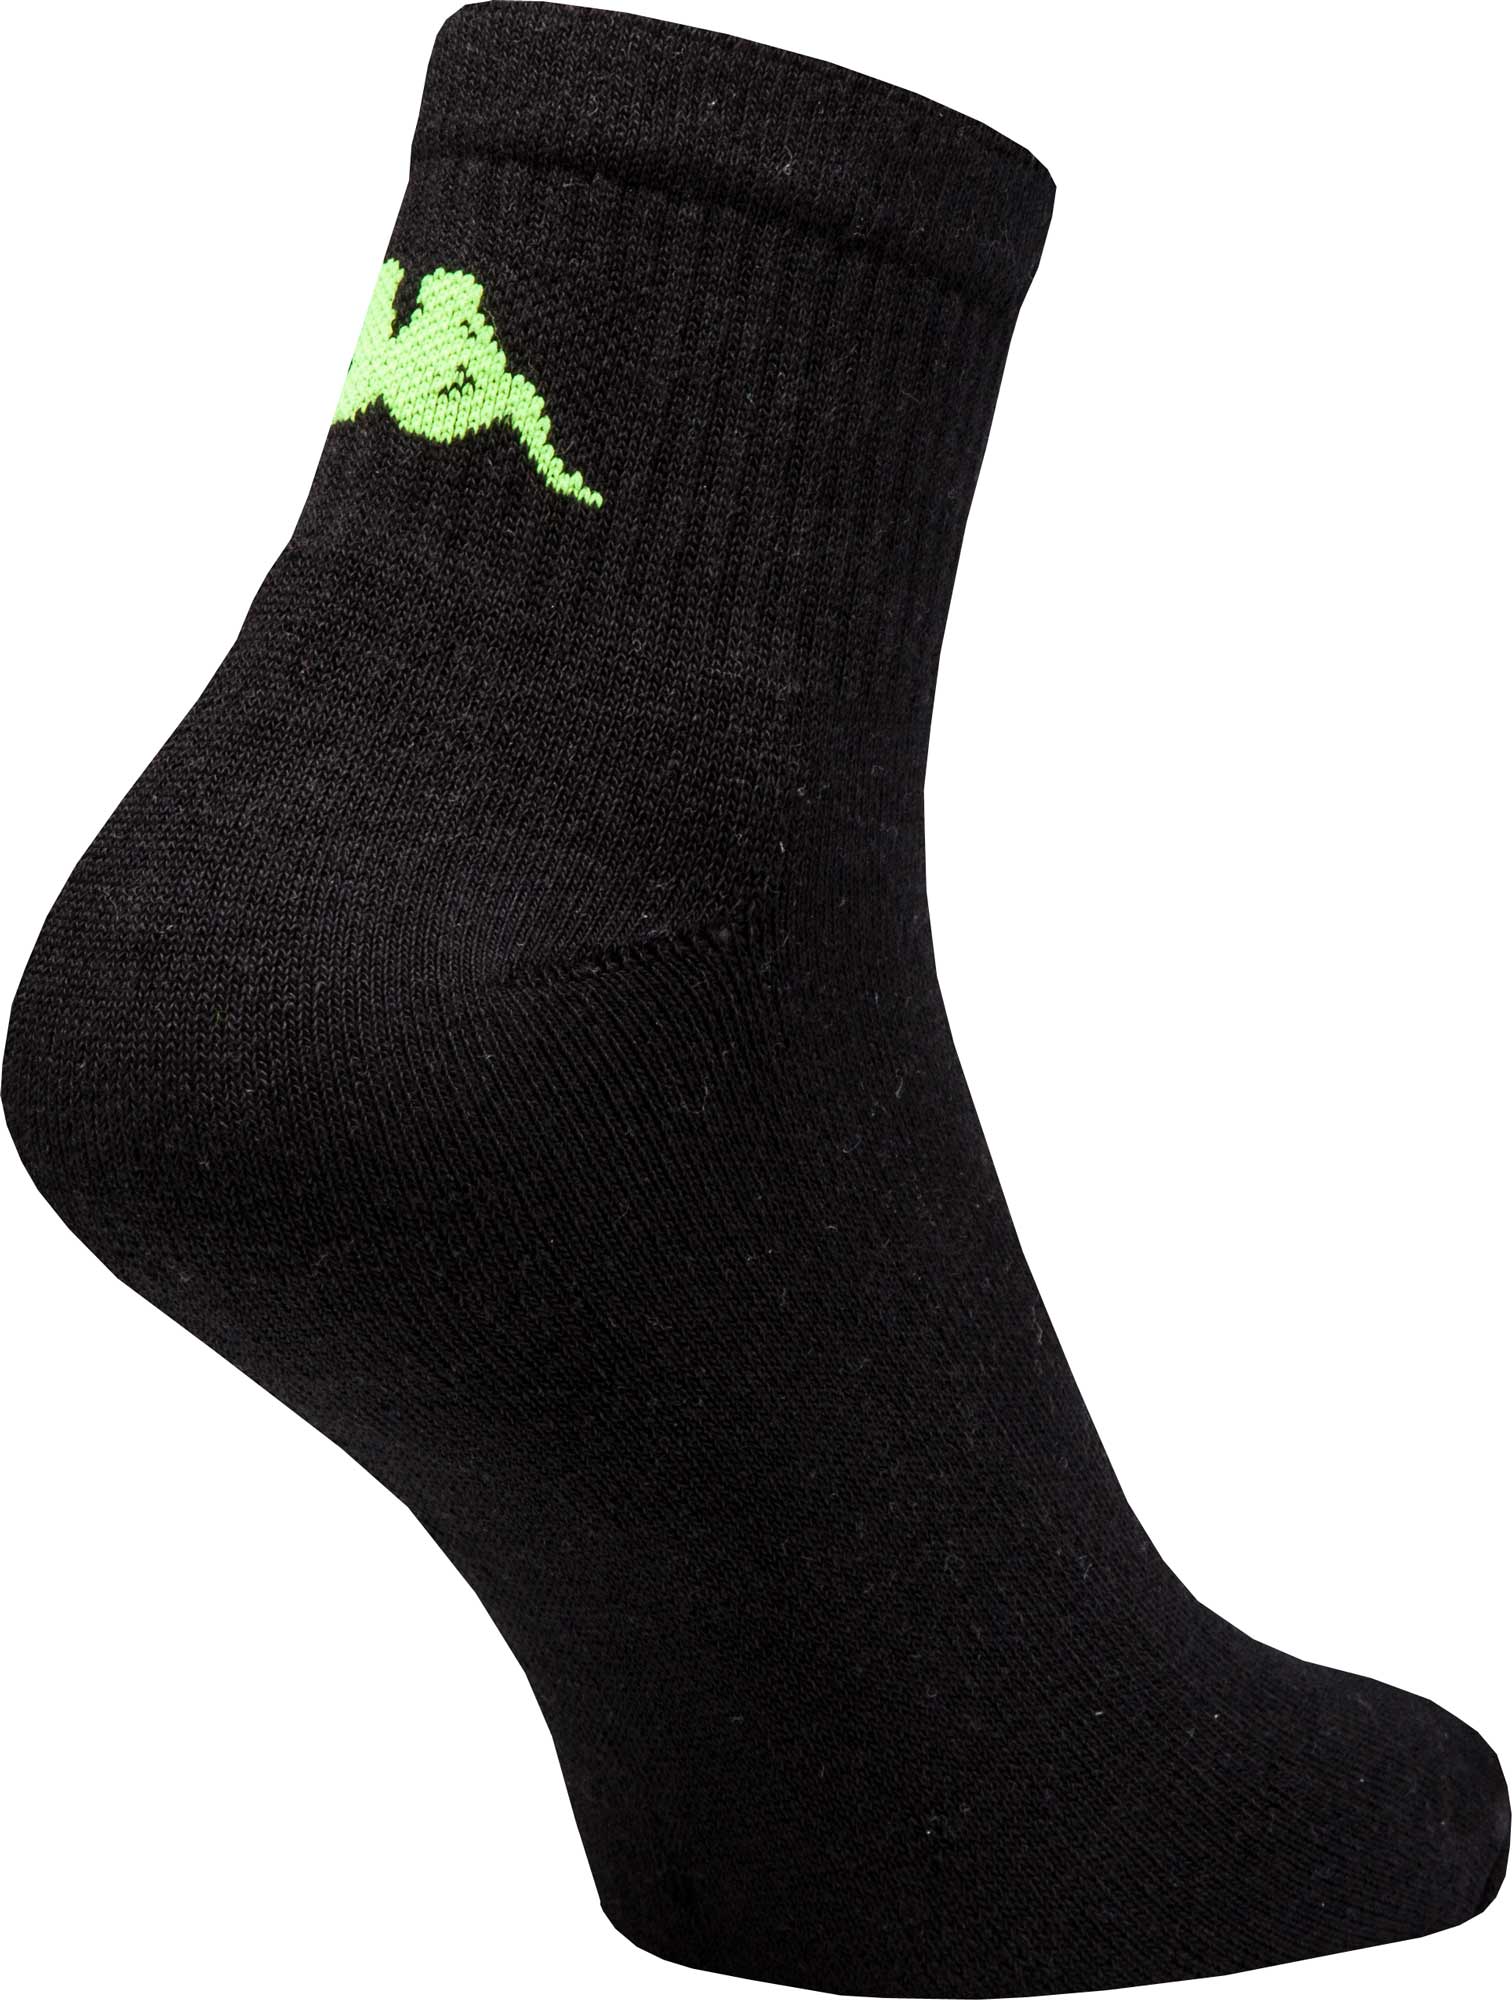 Women’s socks